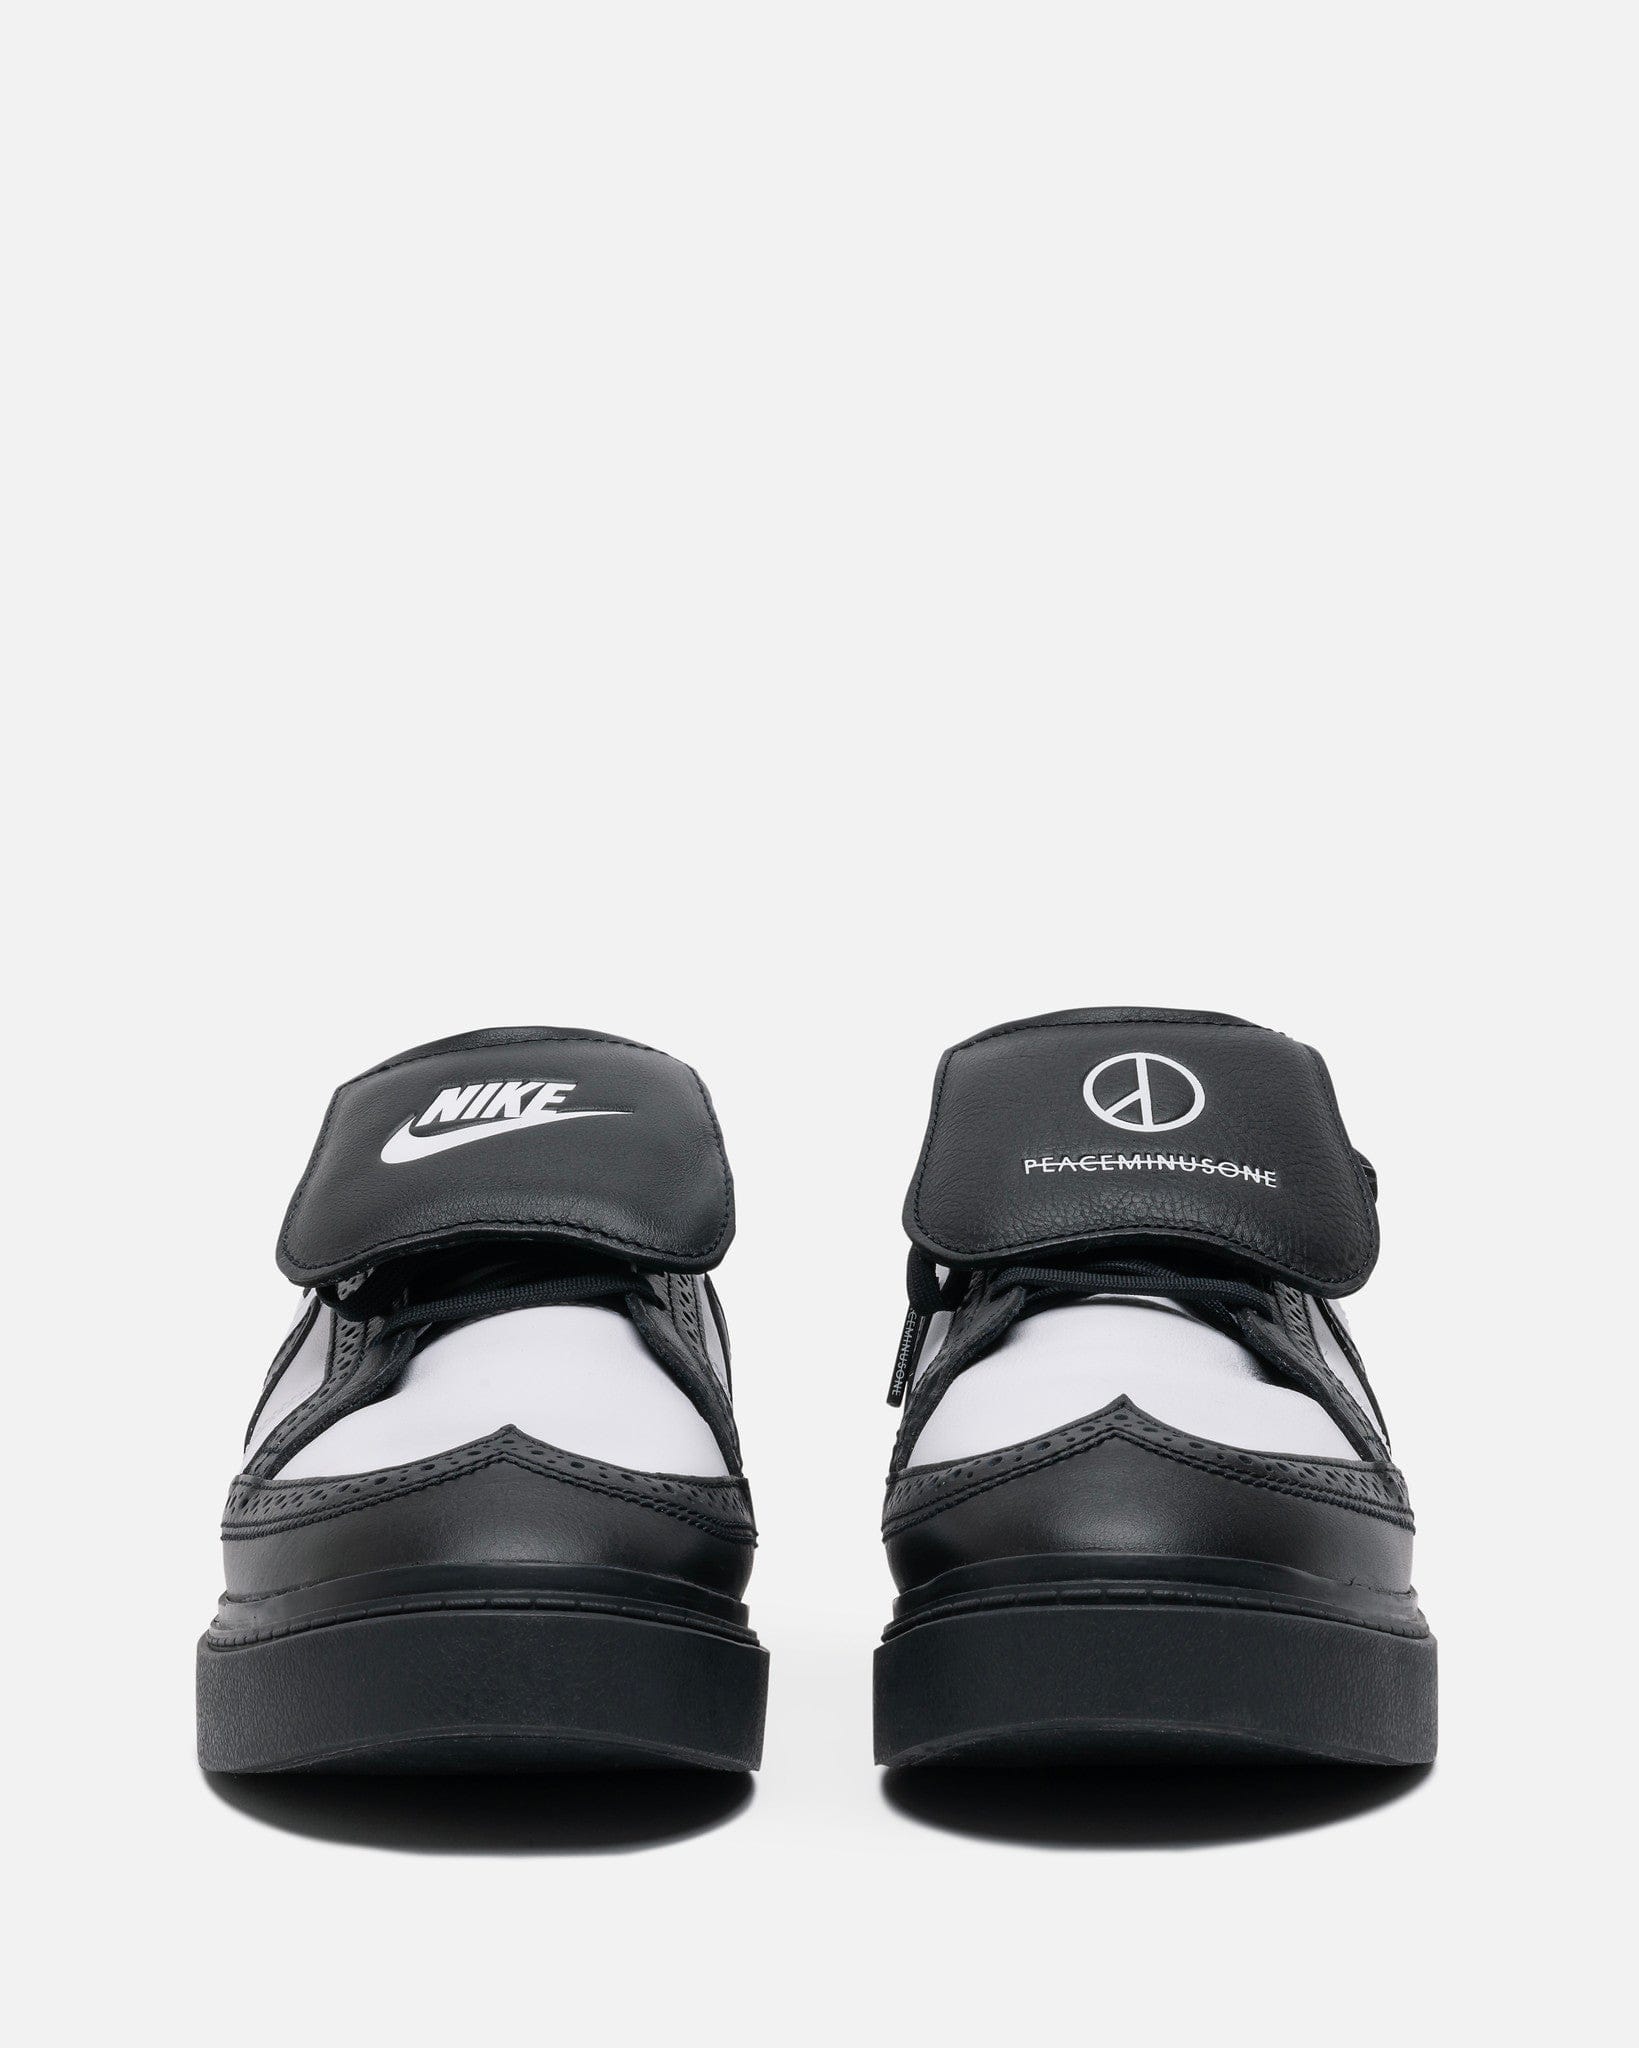 Nike Releases PEACEMINUSONE G-Dragon Kwondo 1 in Black/White